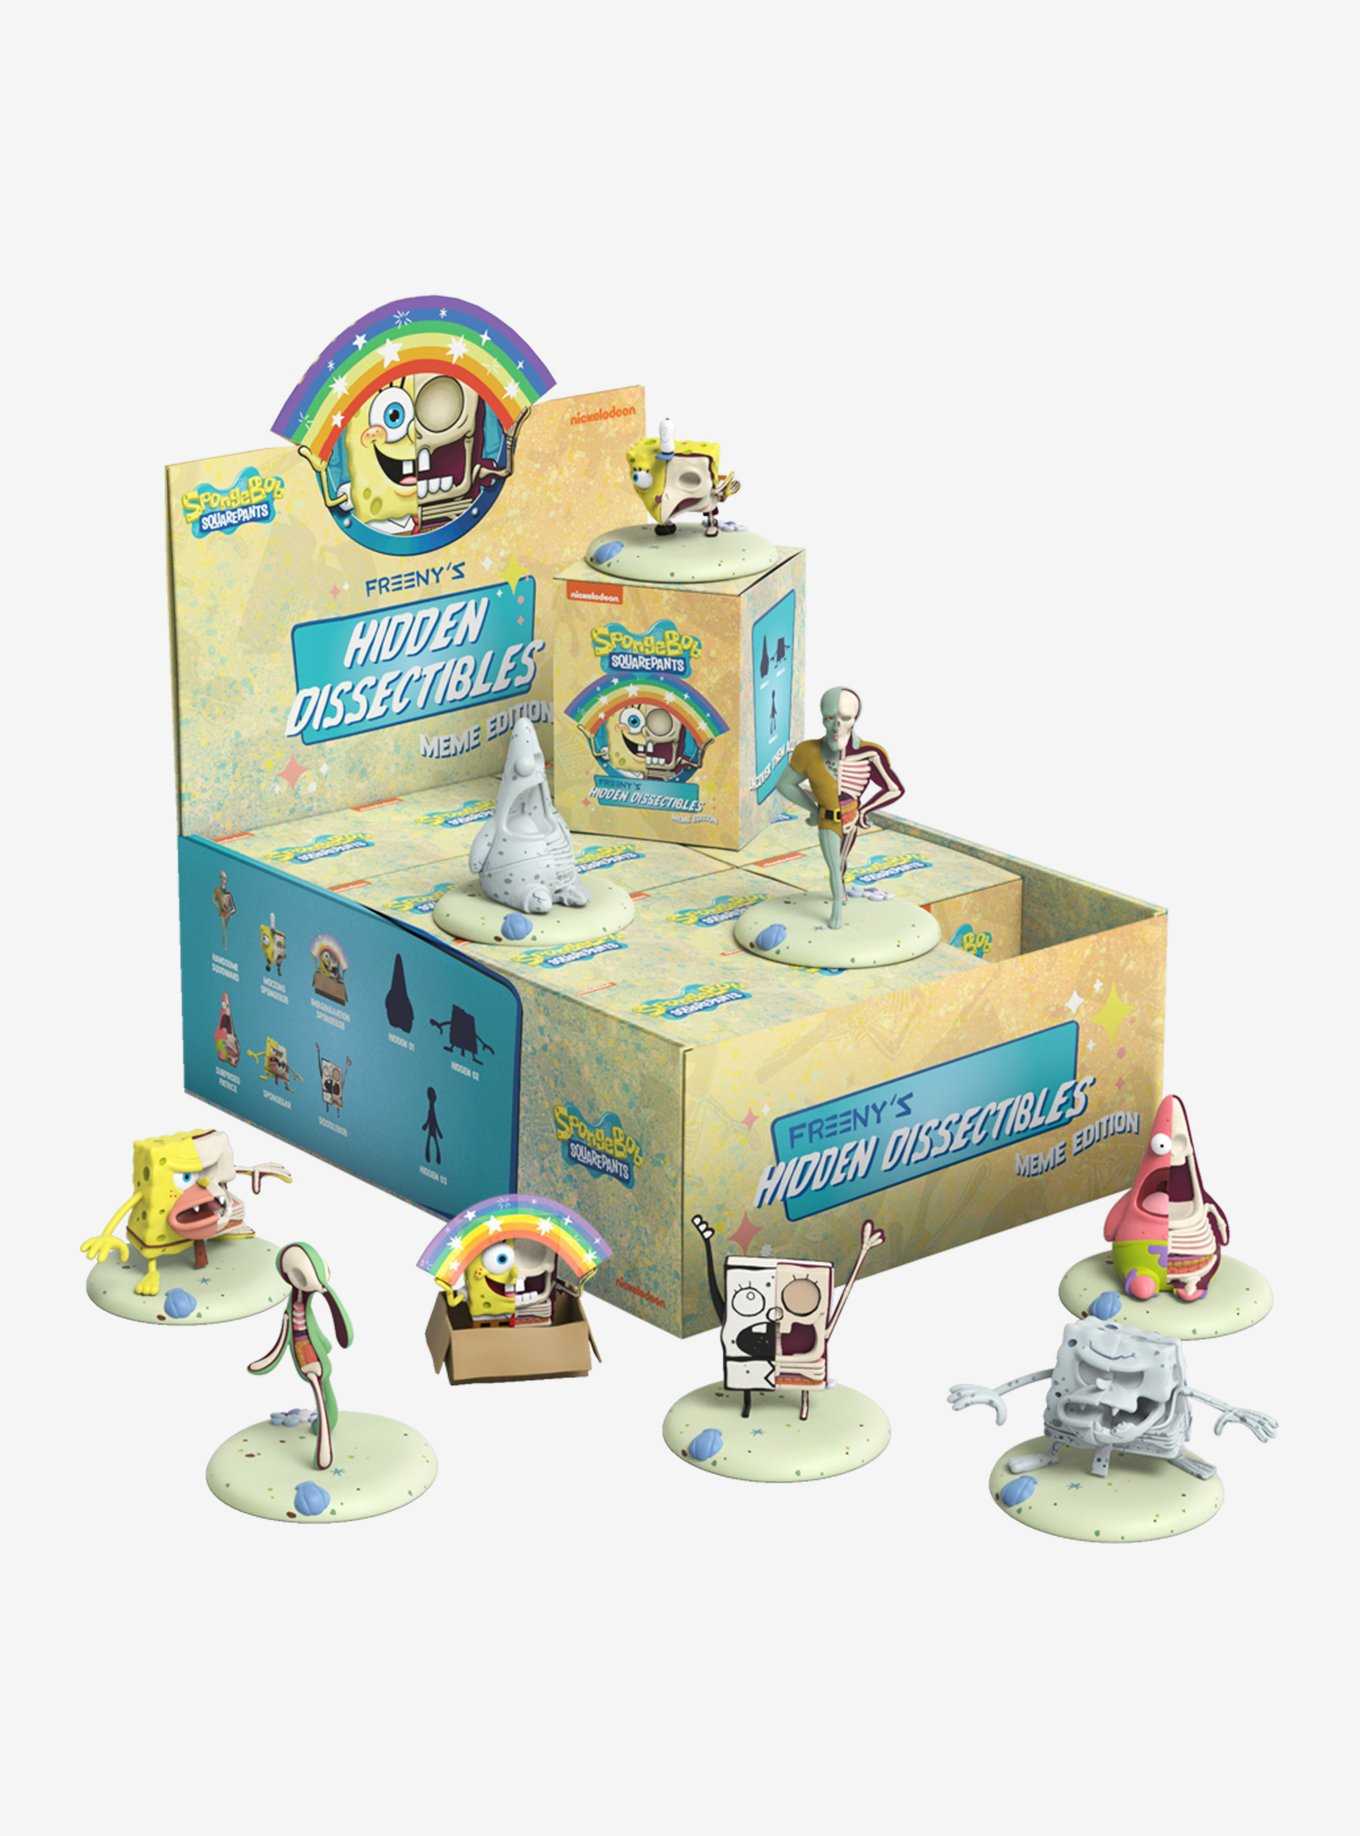 Just Play Nickelodeon SpongeBob SquarePants 5-Pack Collectible